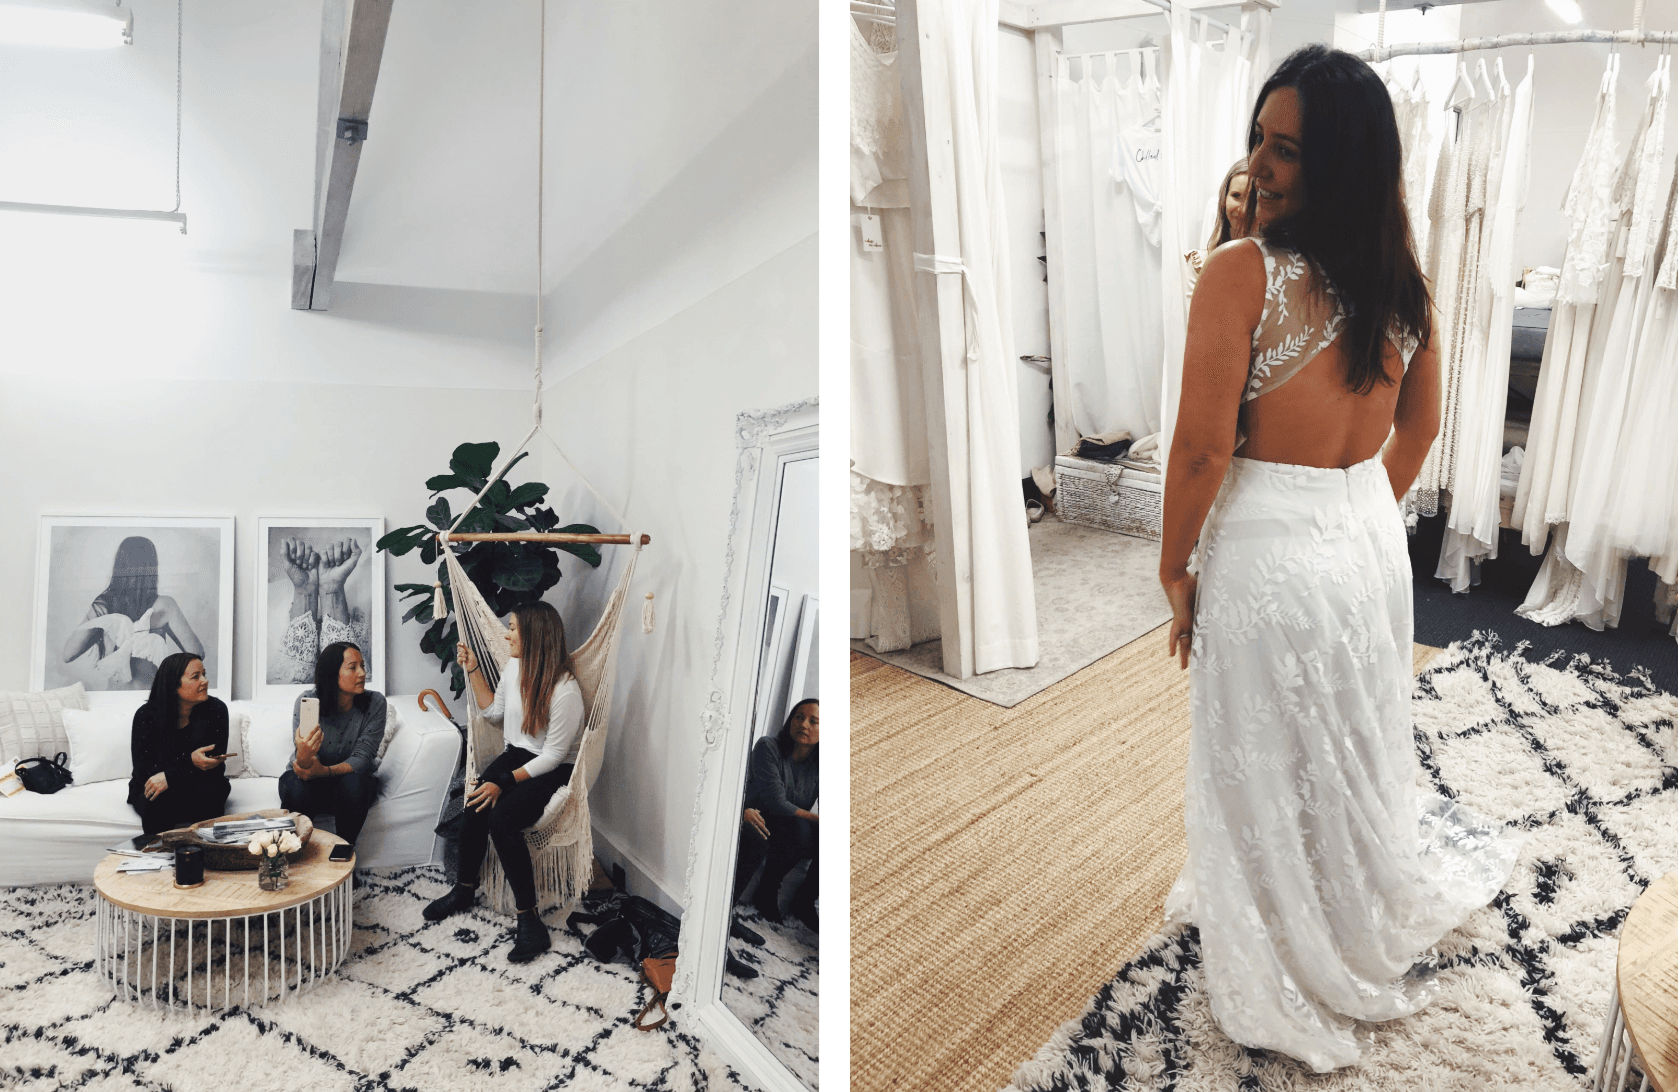 wedding dress shopping